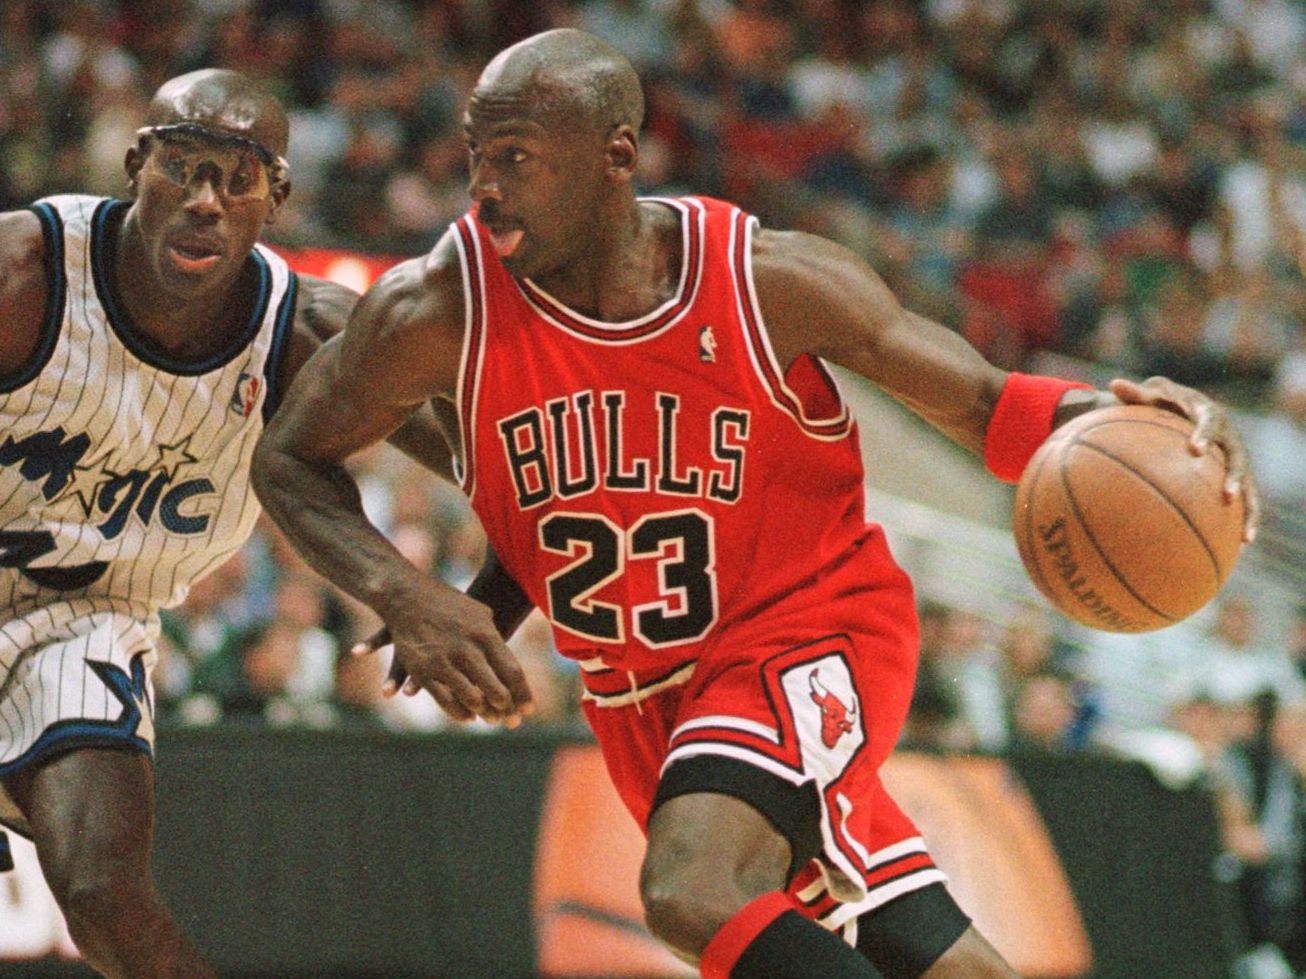 The Last Dance Finale: Michael Jordan dominates game 6 of the 1998